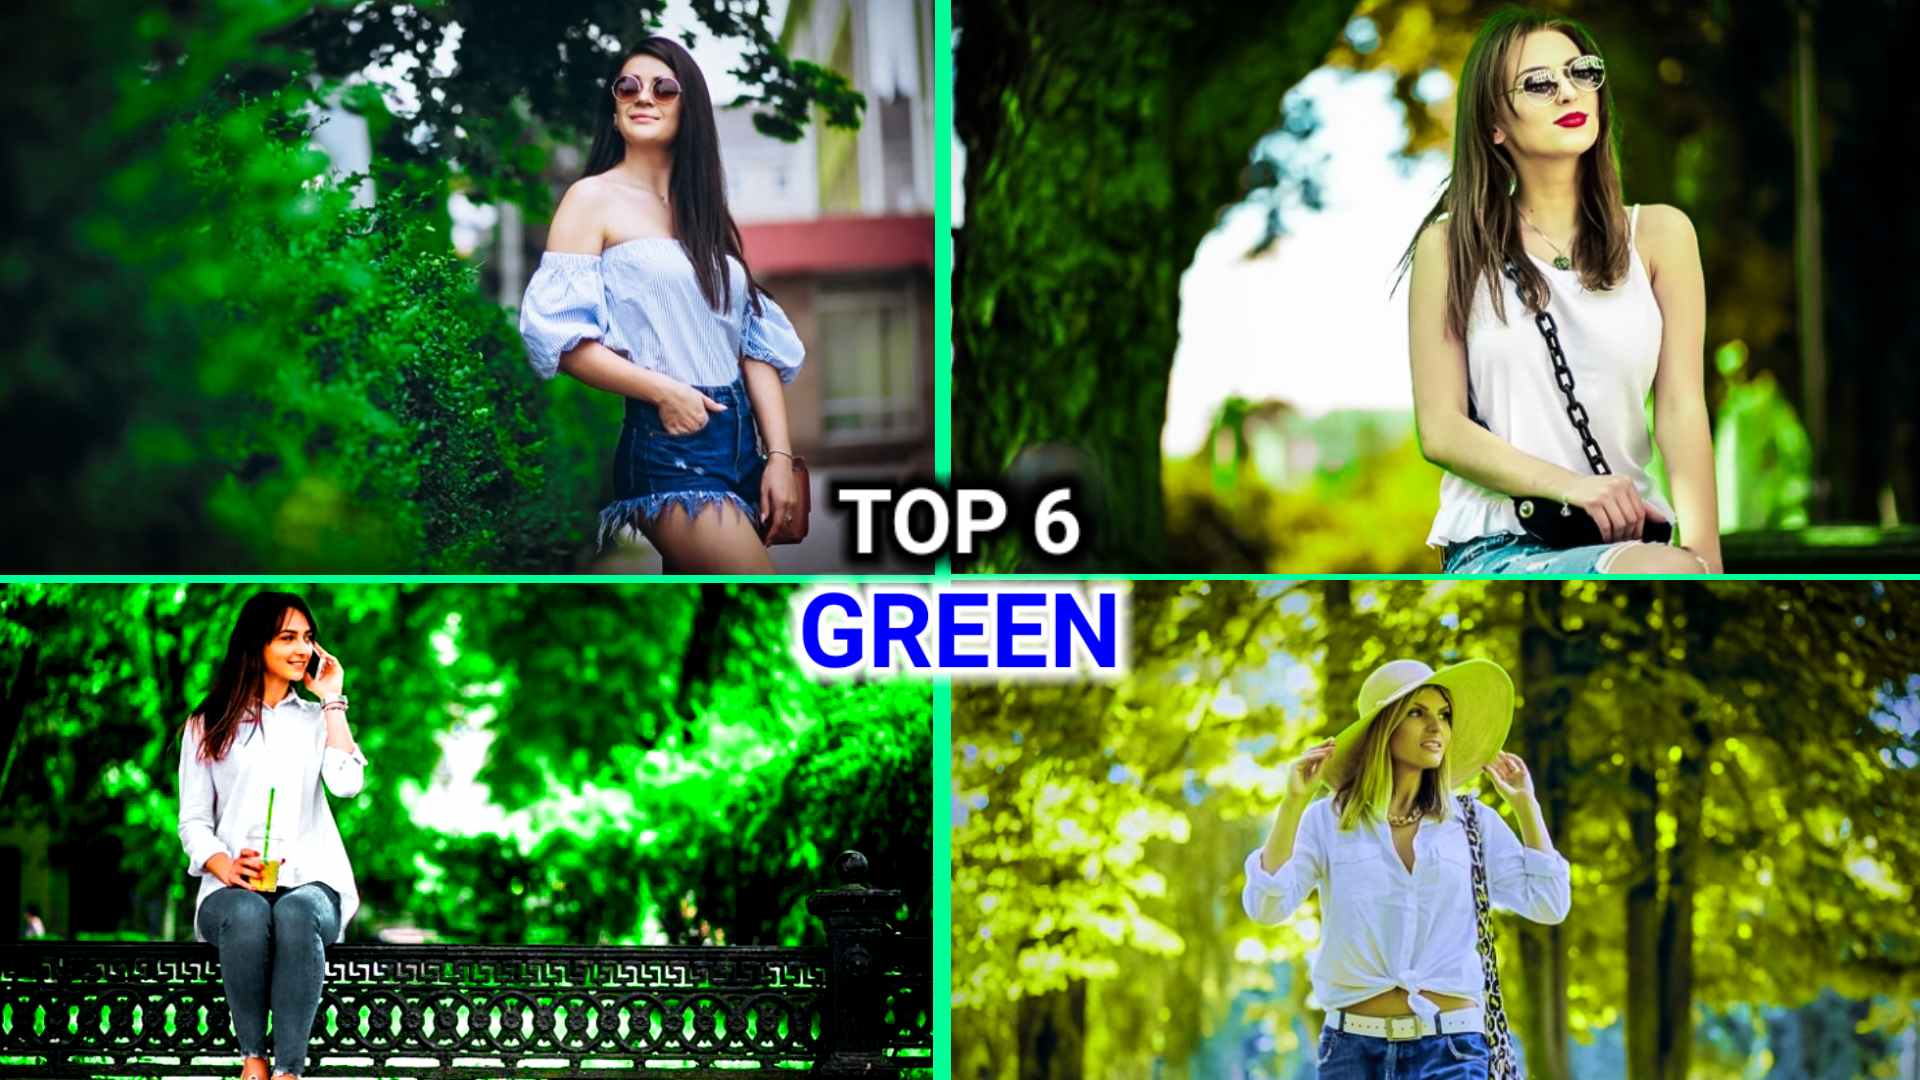 Top 6 Green lightroom presets free download.